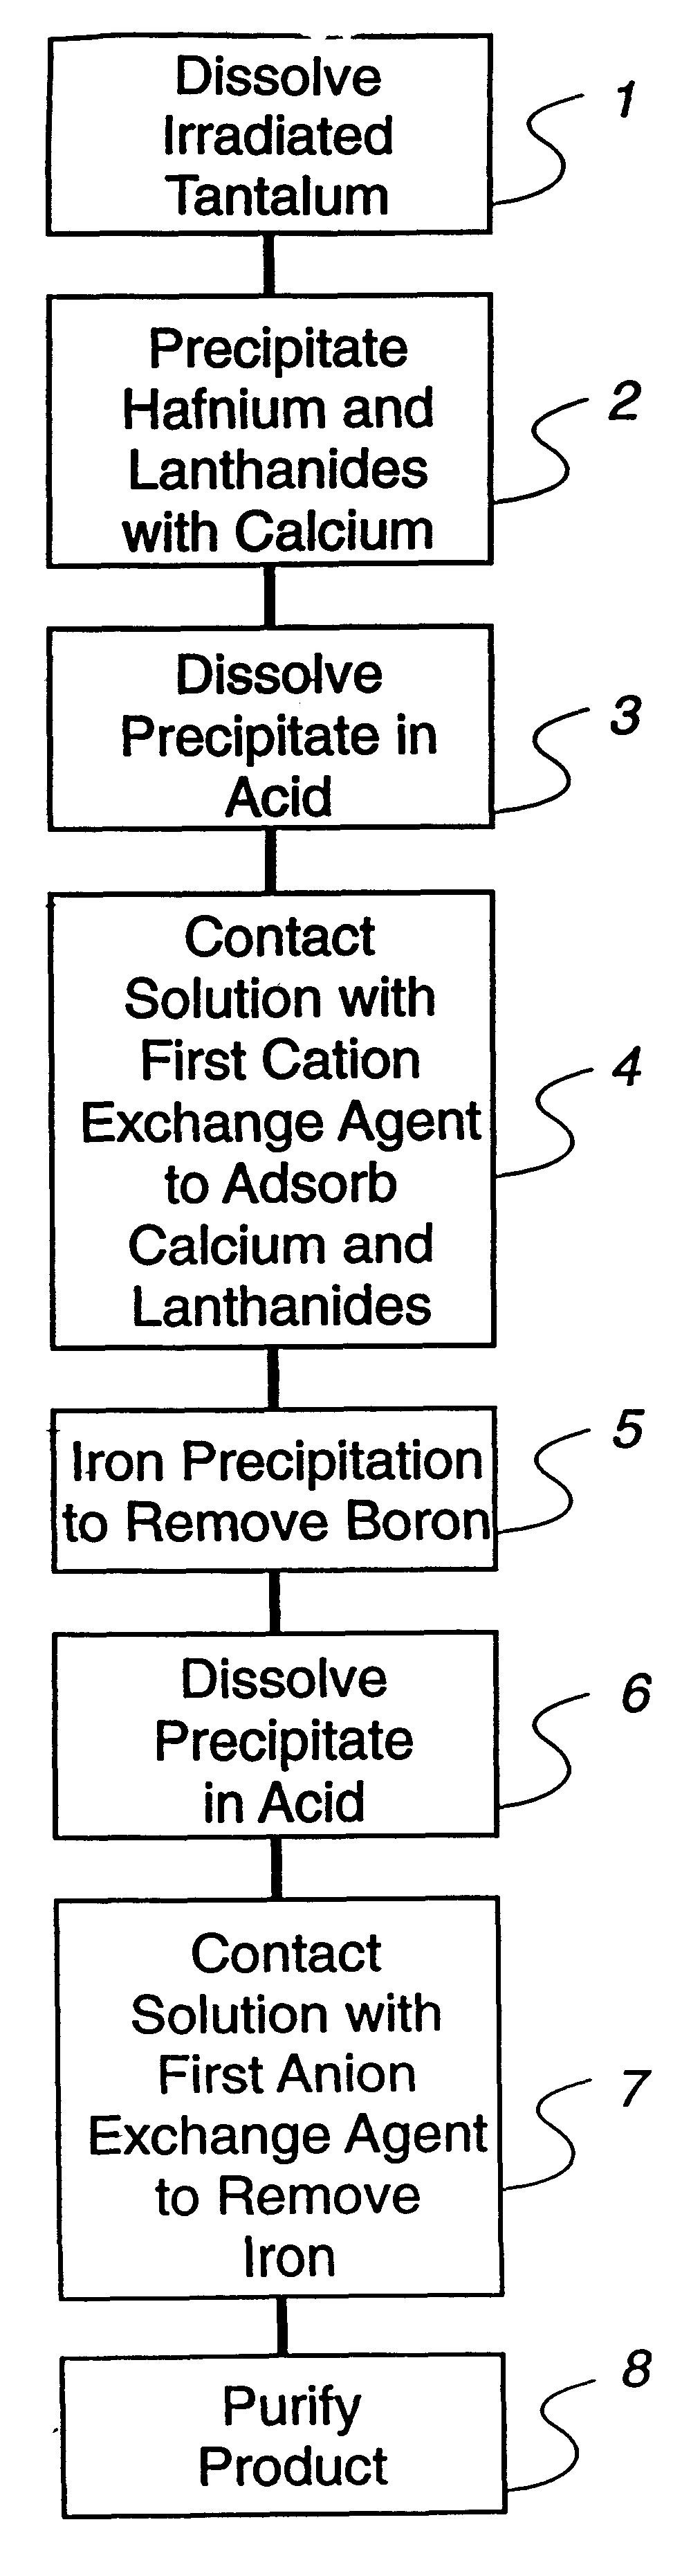 Hafnium radioisotope recovery from irradiated tantalum